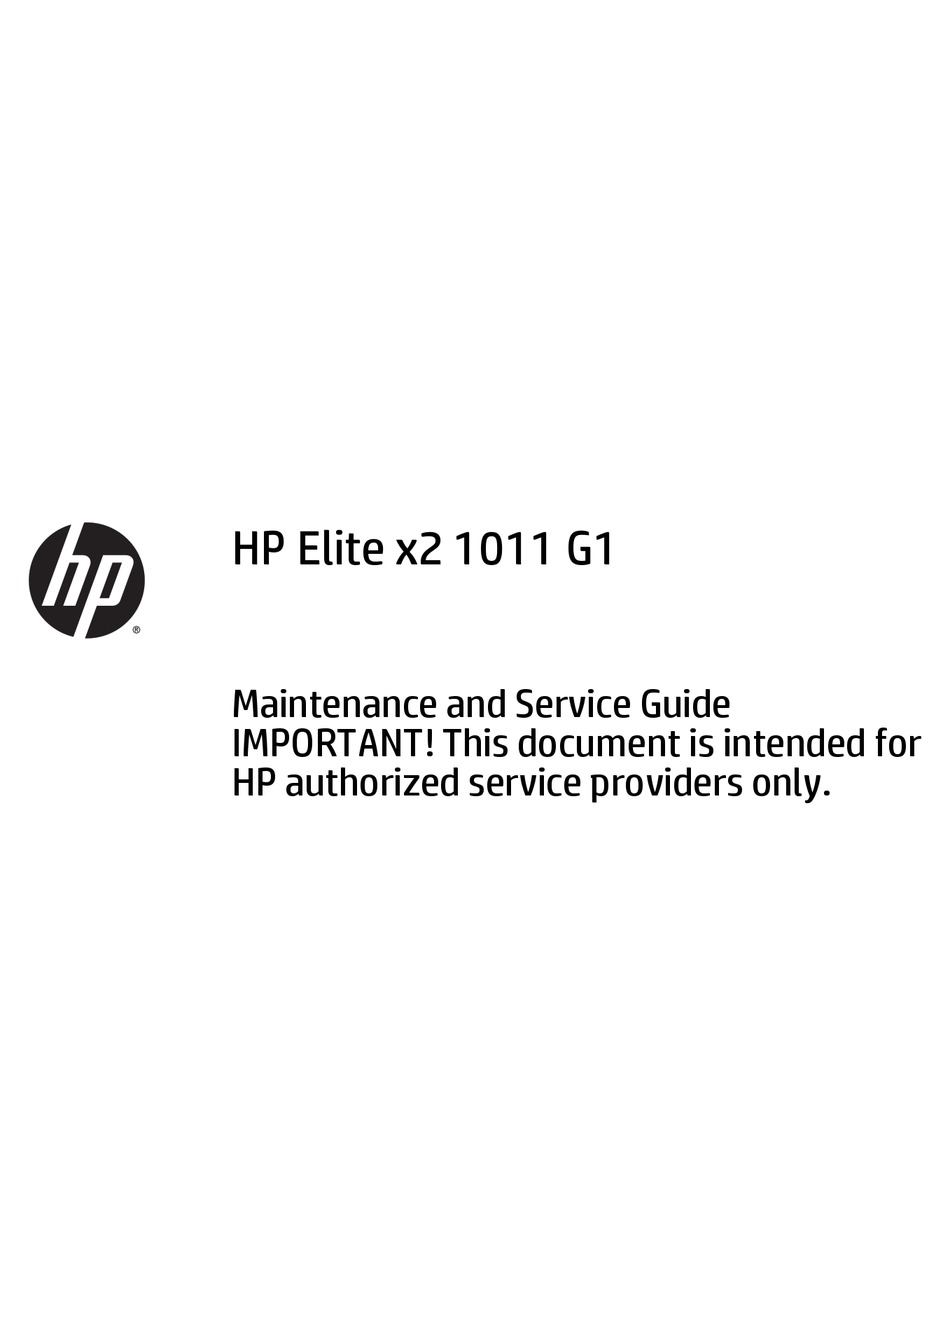 HP ELITE X2 1011 G1 MAINTENANCE AND SERVICE MANUAL Pdf Download 